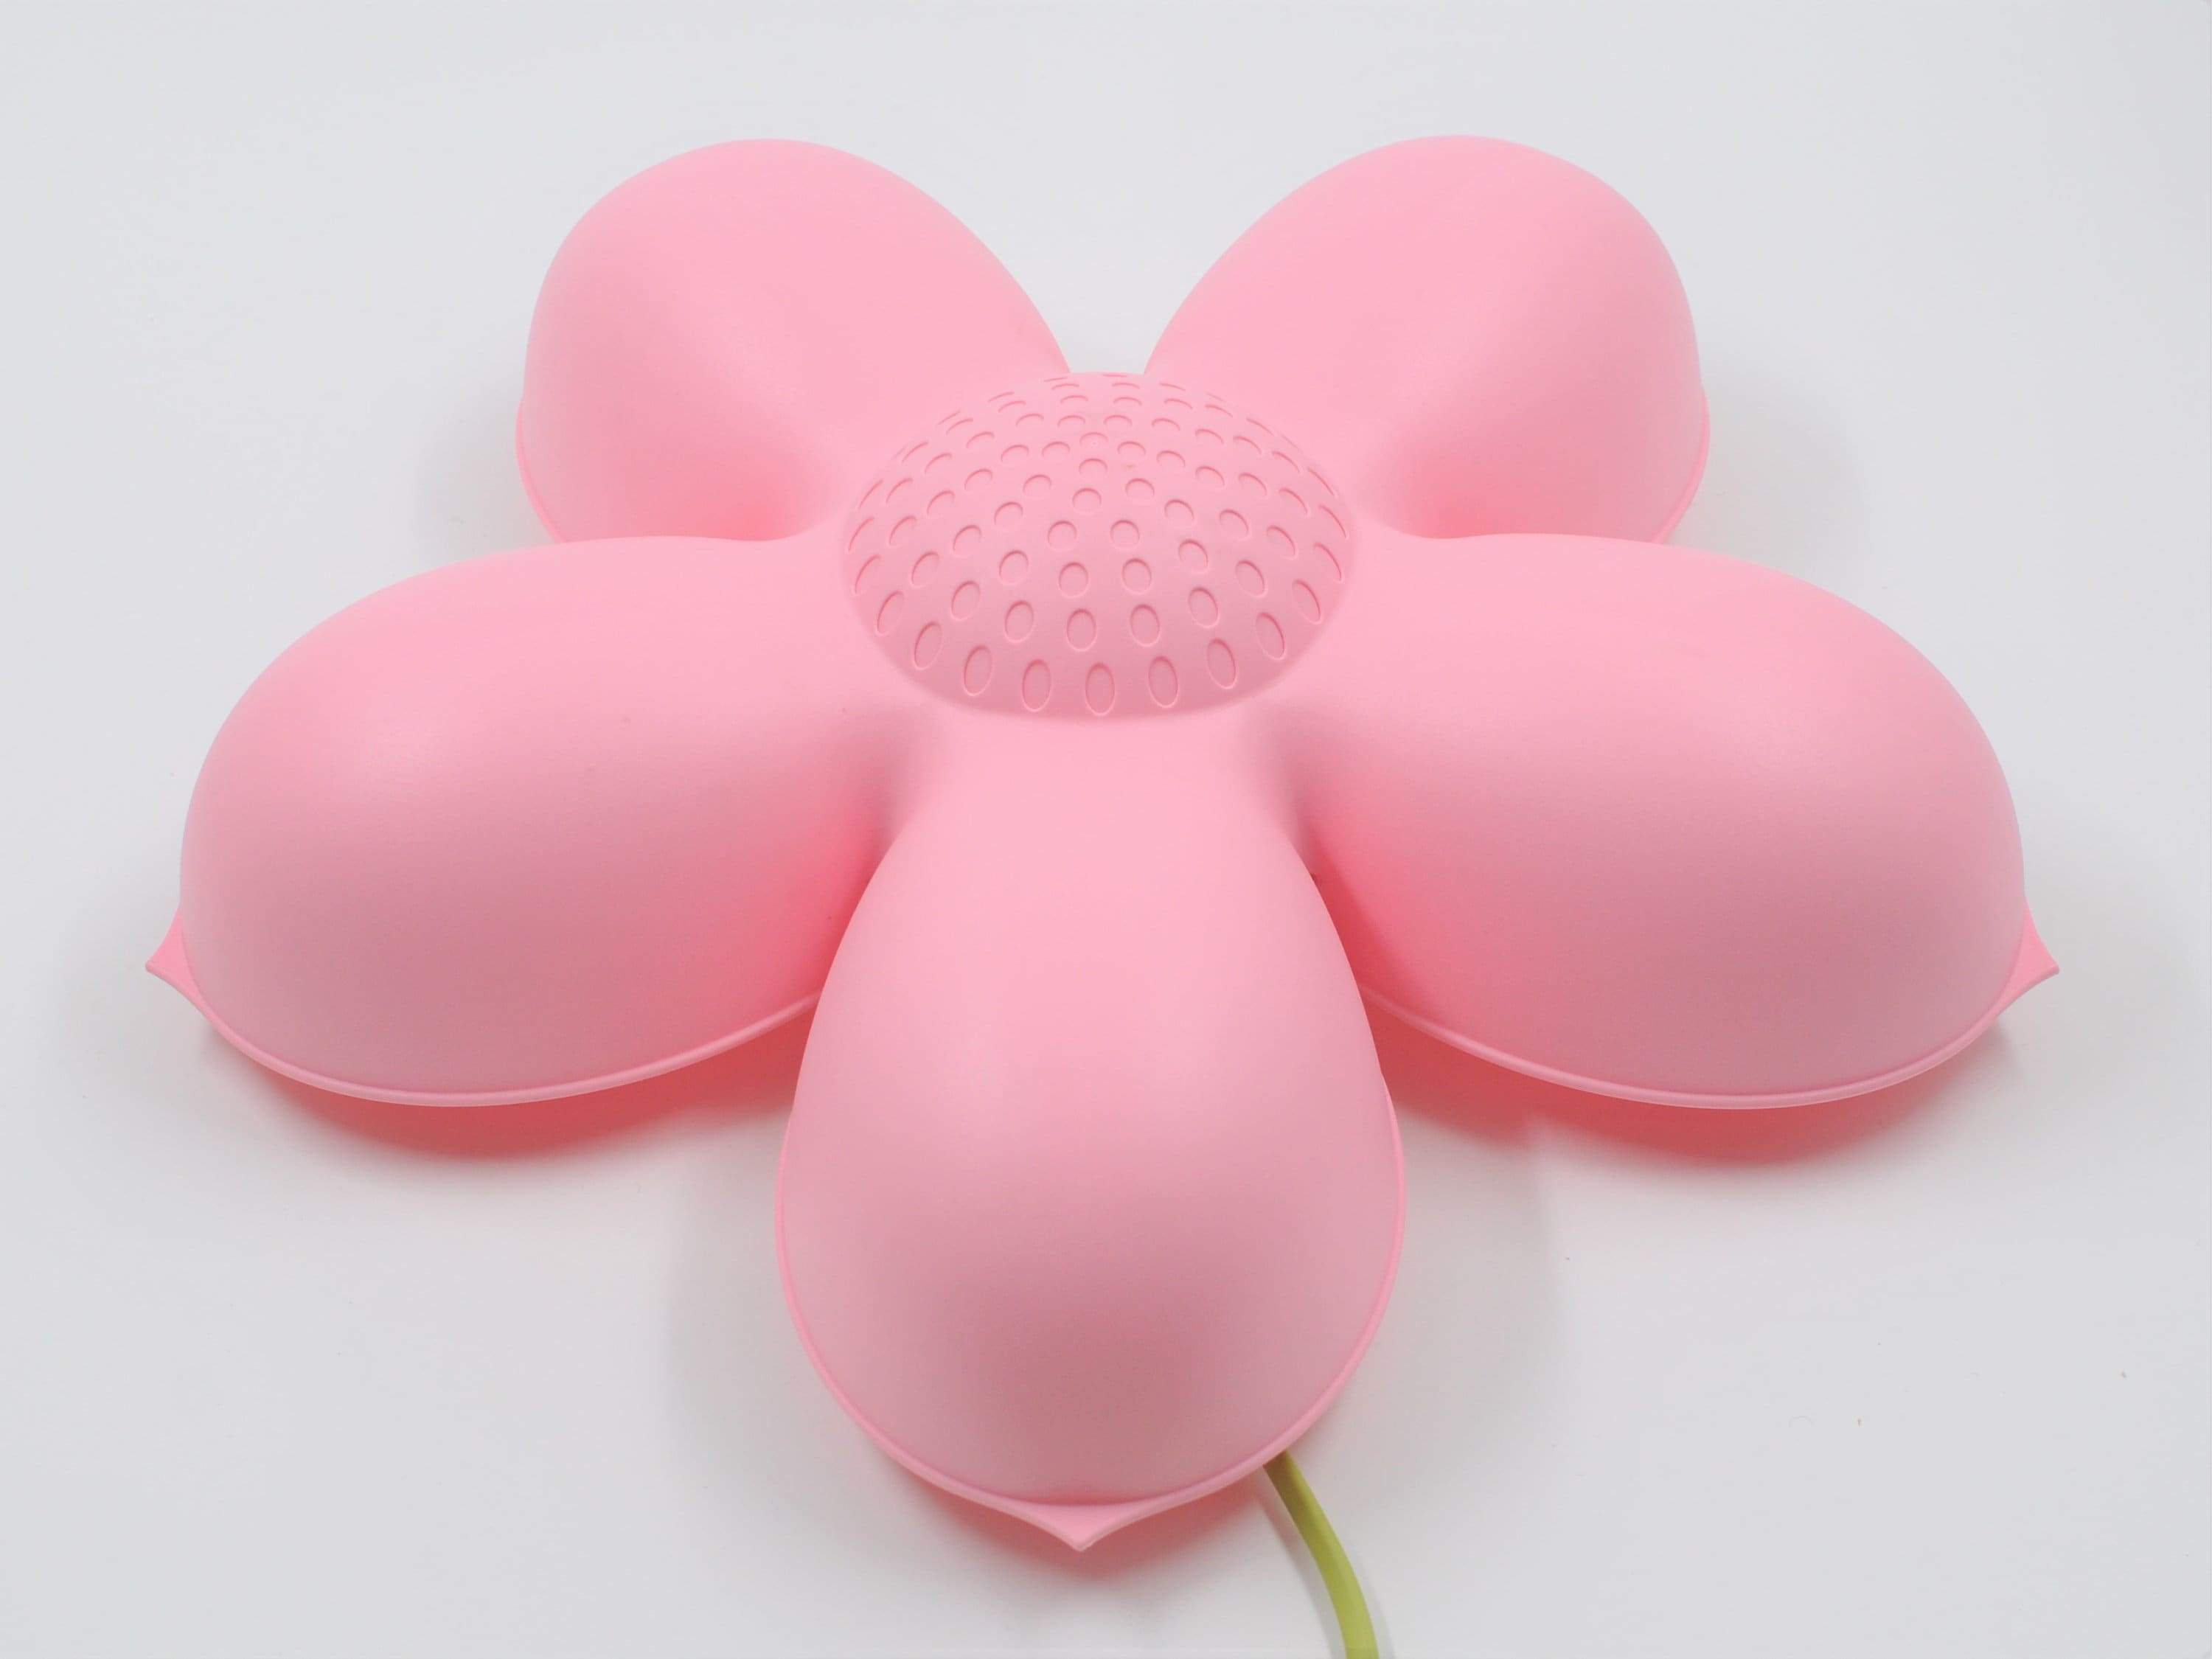 gnier Min Hej Ikea Smila Blomma Pink Plastic Flower Shaped Wall Lamp With - Etsy